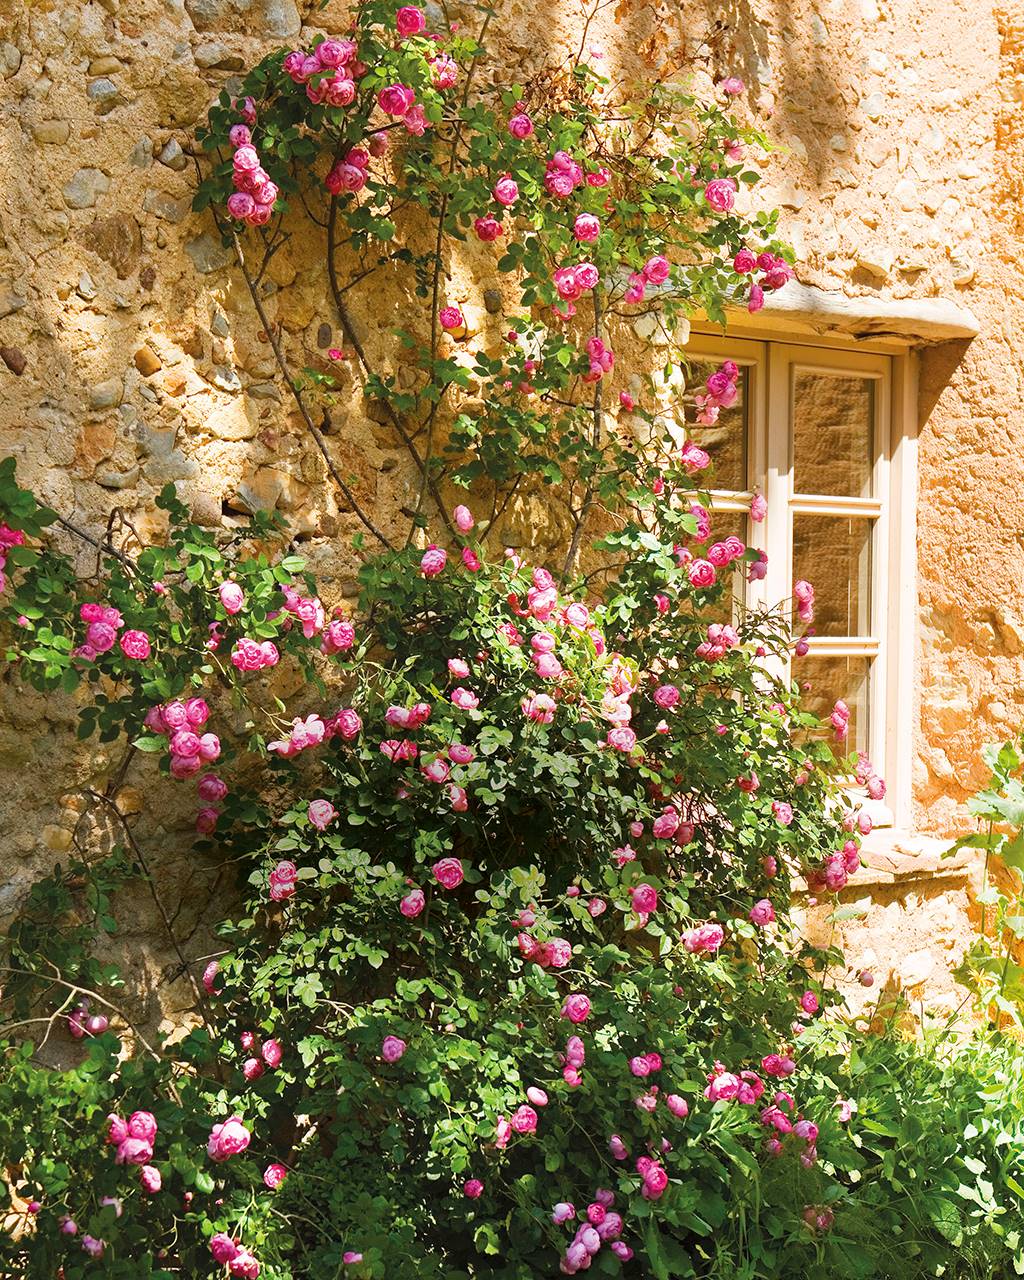 Detail of climbing rosebush on rustic facade